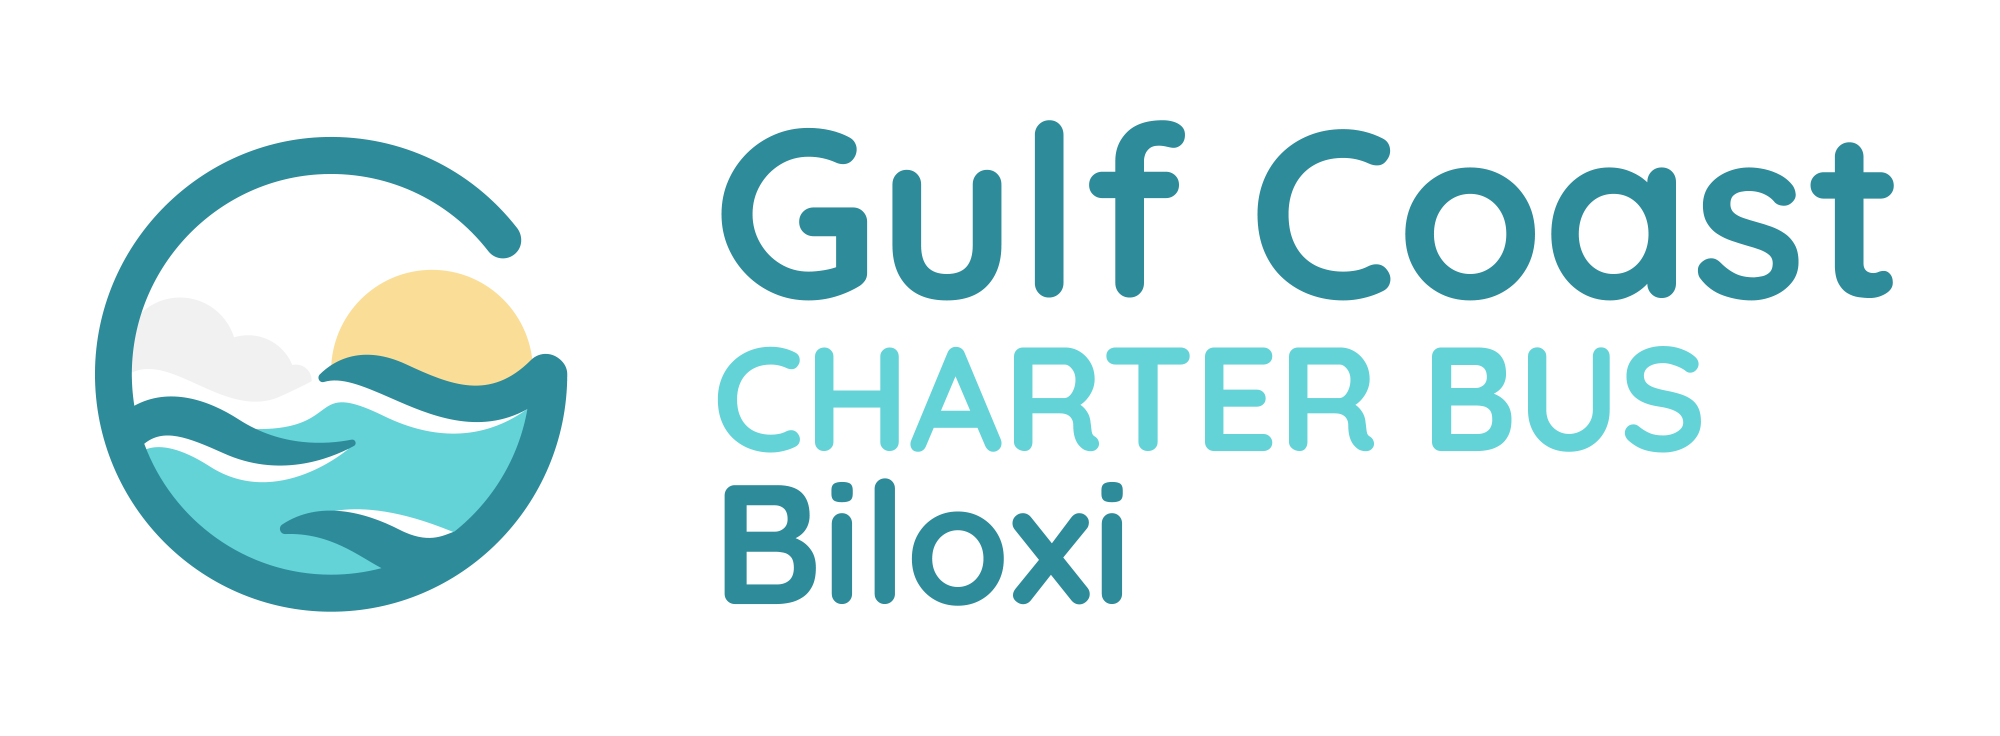 Biloxi charter bus